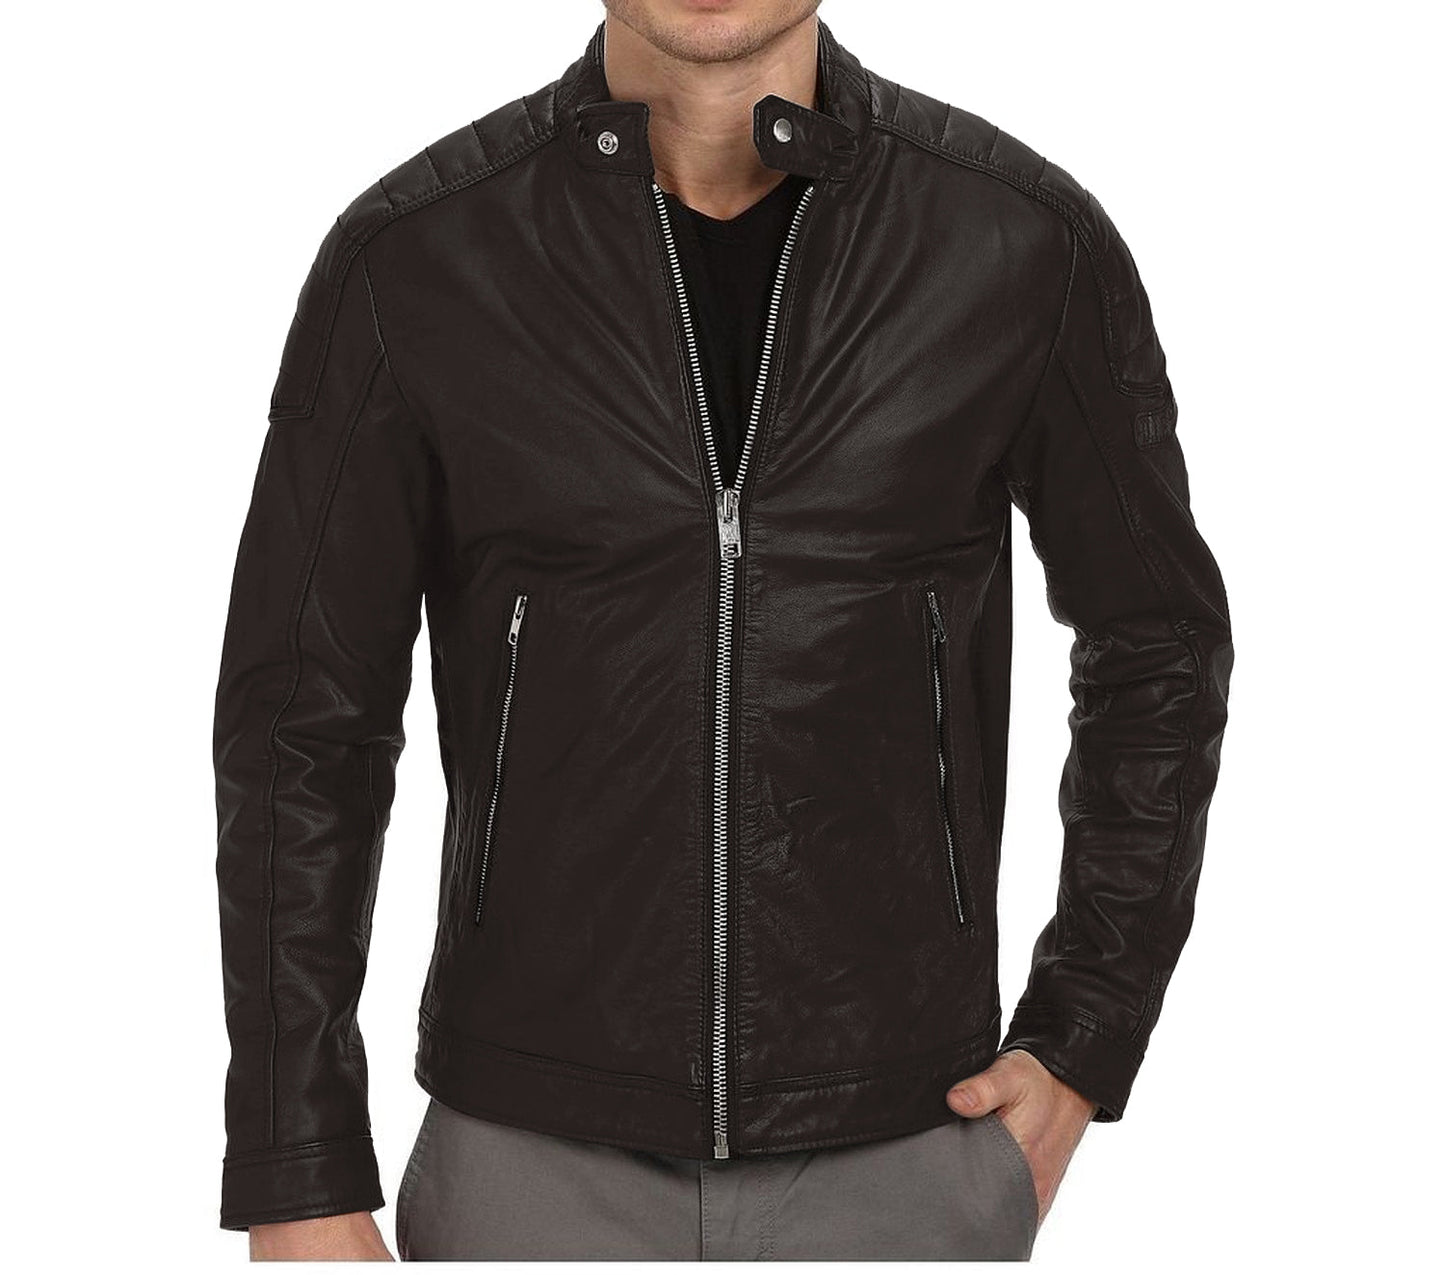 Leather Jackets Hub Mens Genuine Lambskin Leather Jacket (Black, Racer Jacket) - 1501026